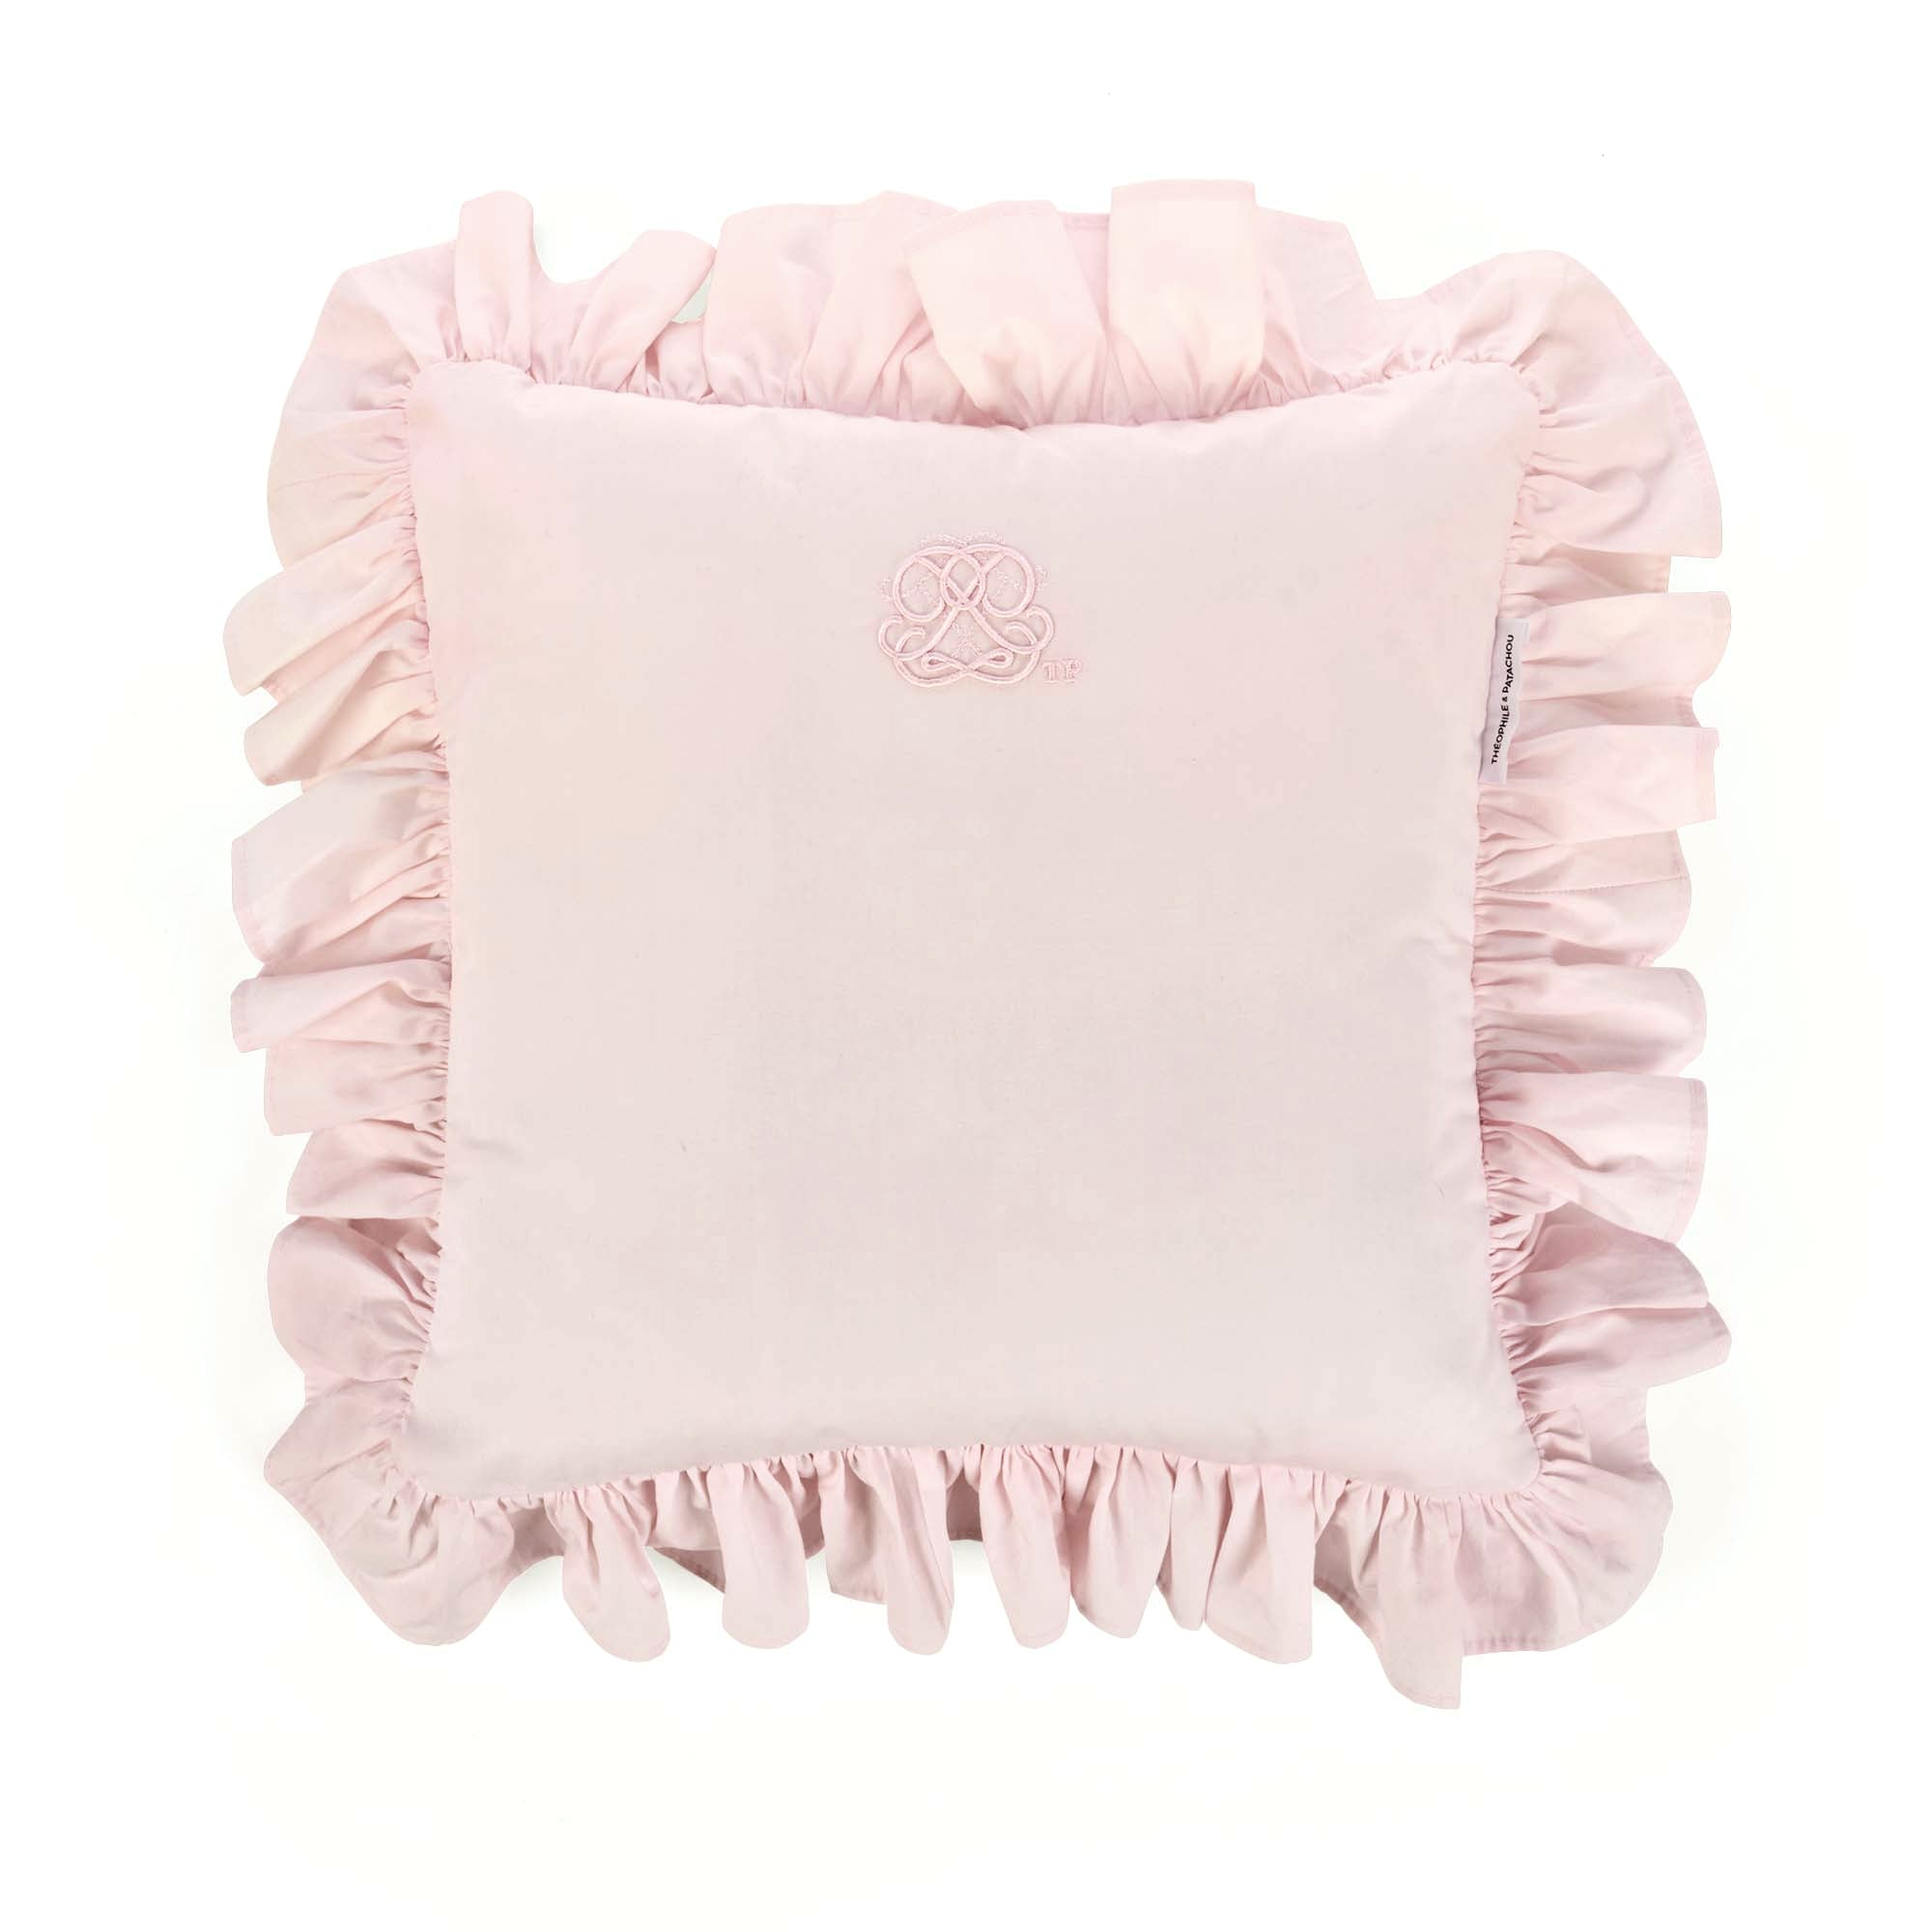 Theophile & Patachou Cushion - Cotton Pink